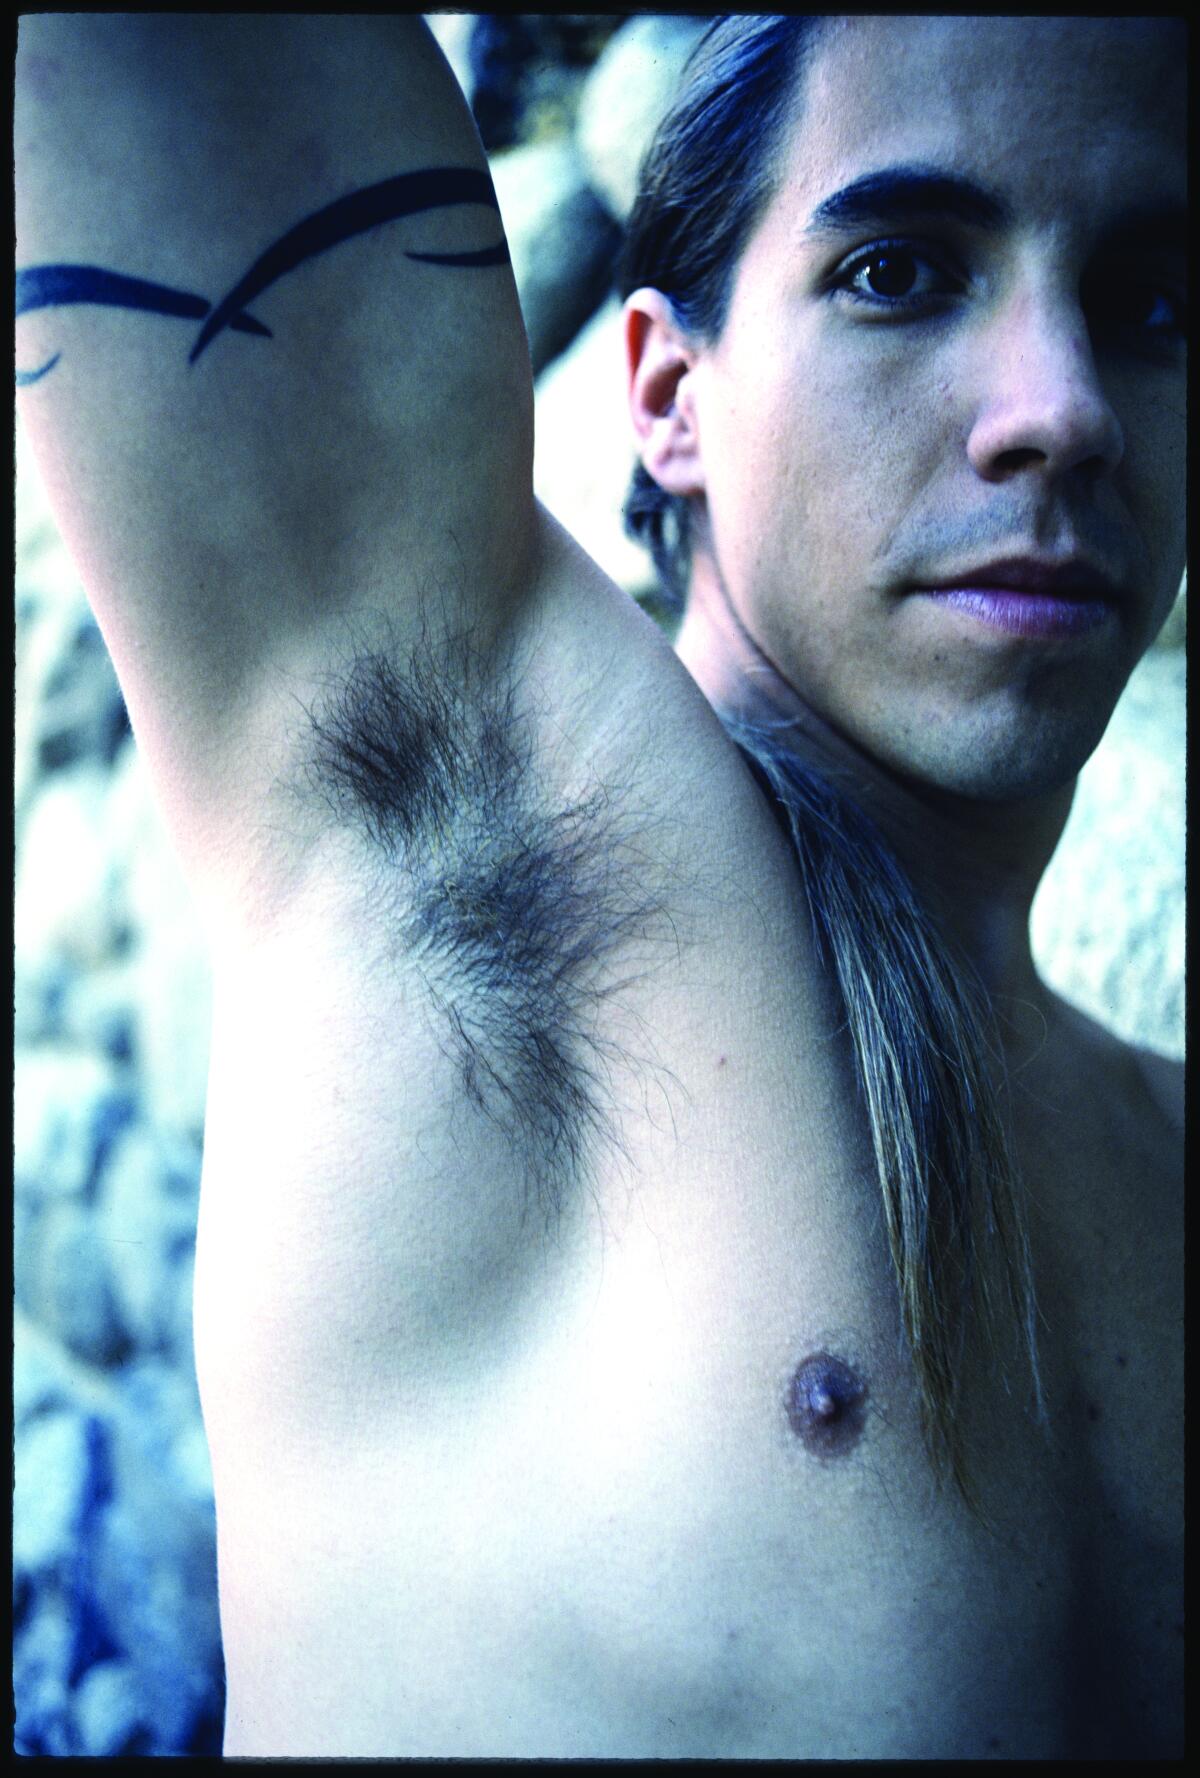 Anthony Kiedis' armpit.